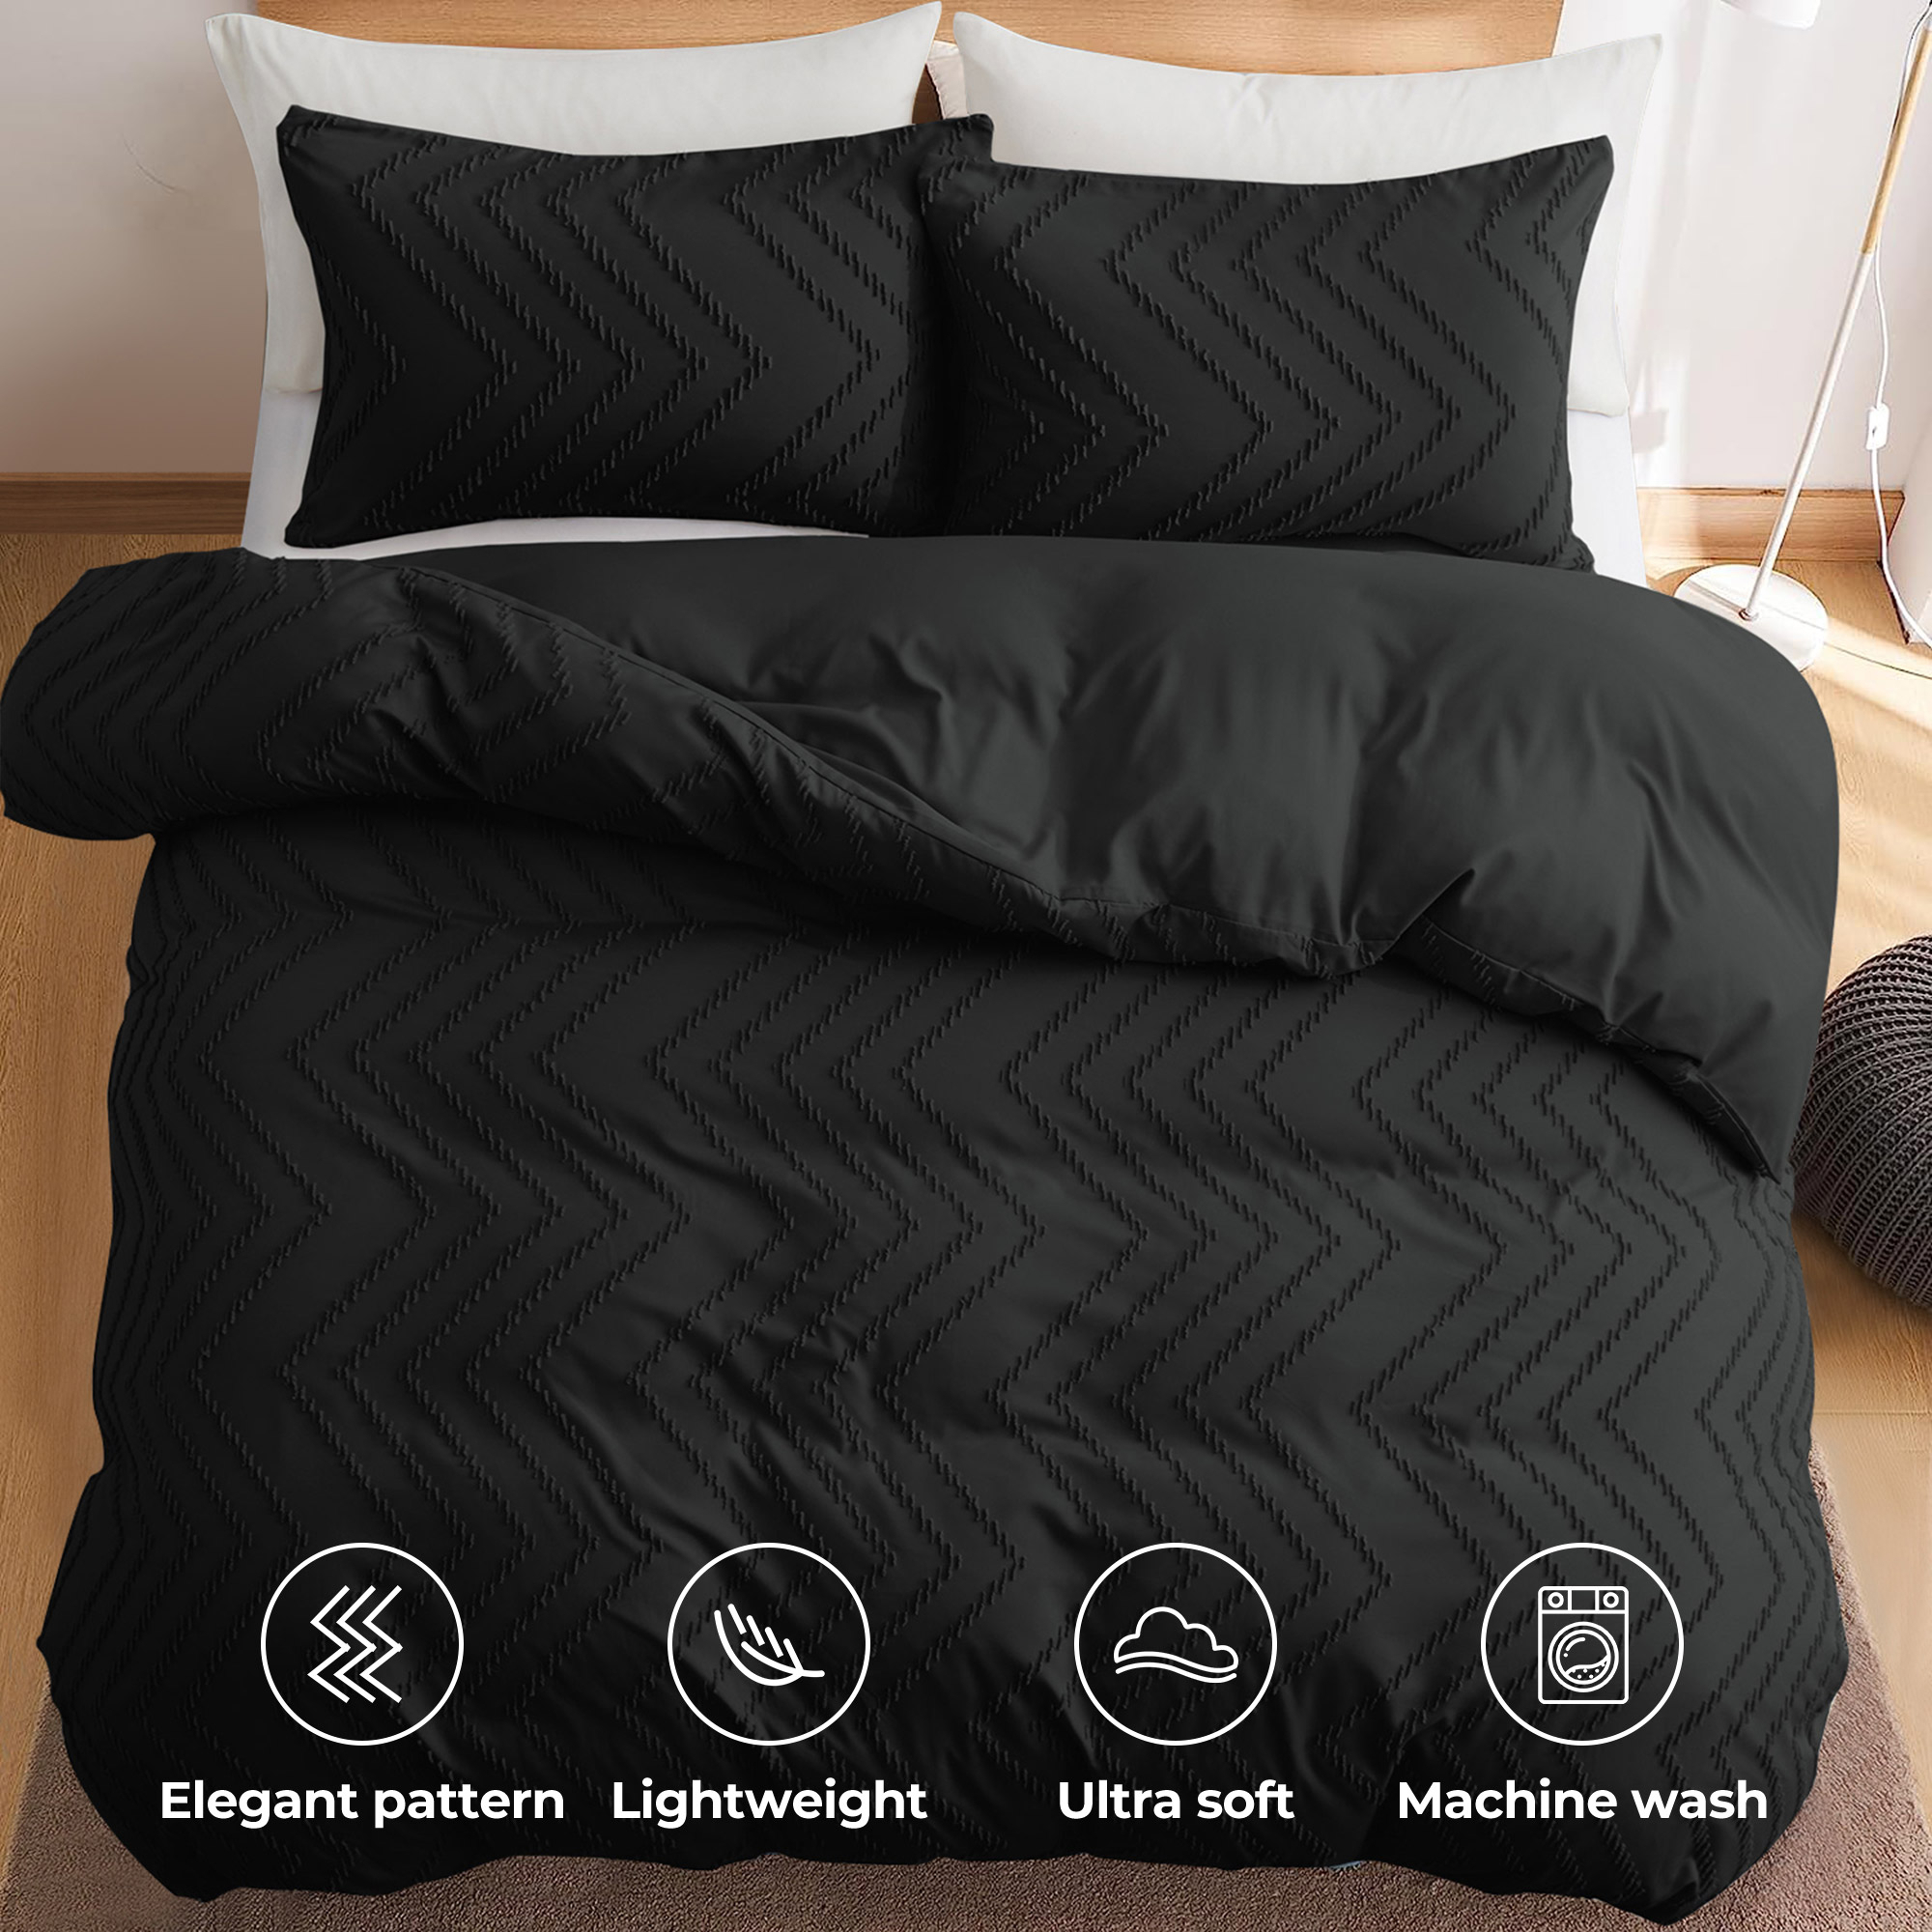 Basic Bedding Sets With All Season Goose Down Feather Comforter, 2 Pack Goose Down Pillows, Duvet Cover Set - Black Bundles Option, King Siz